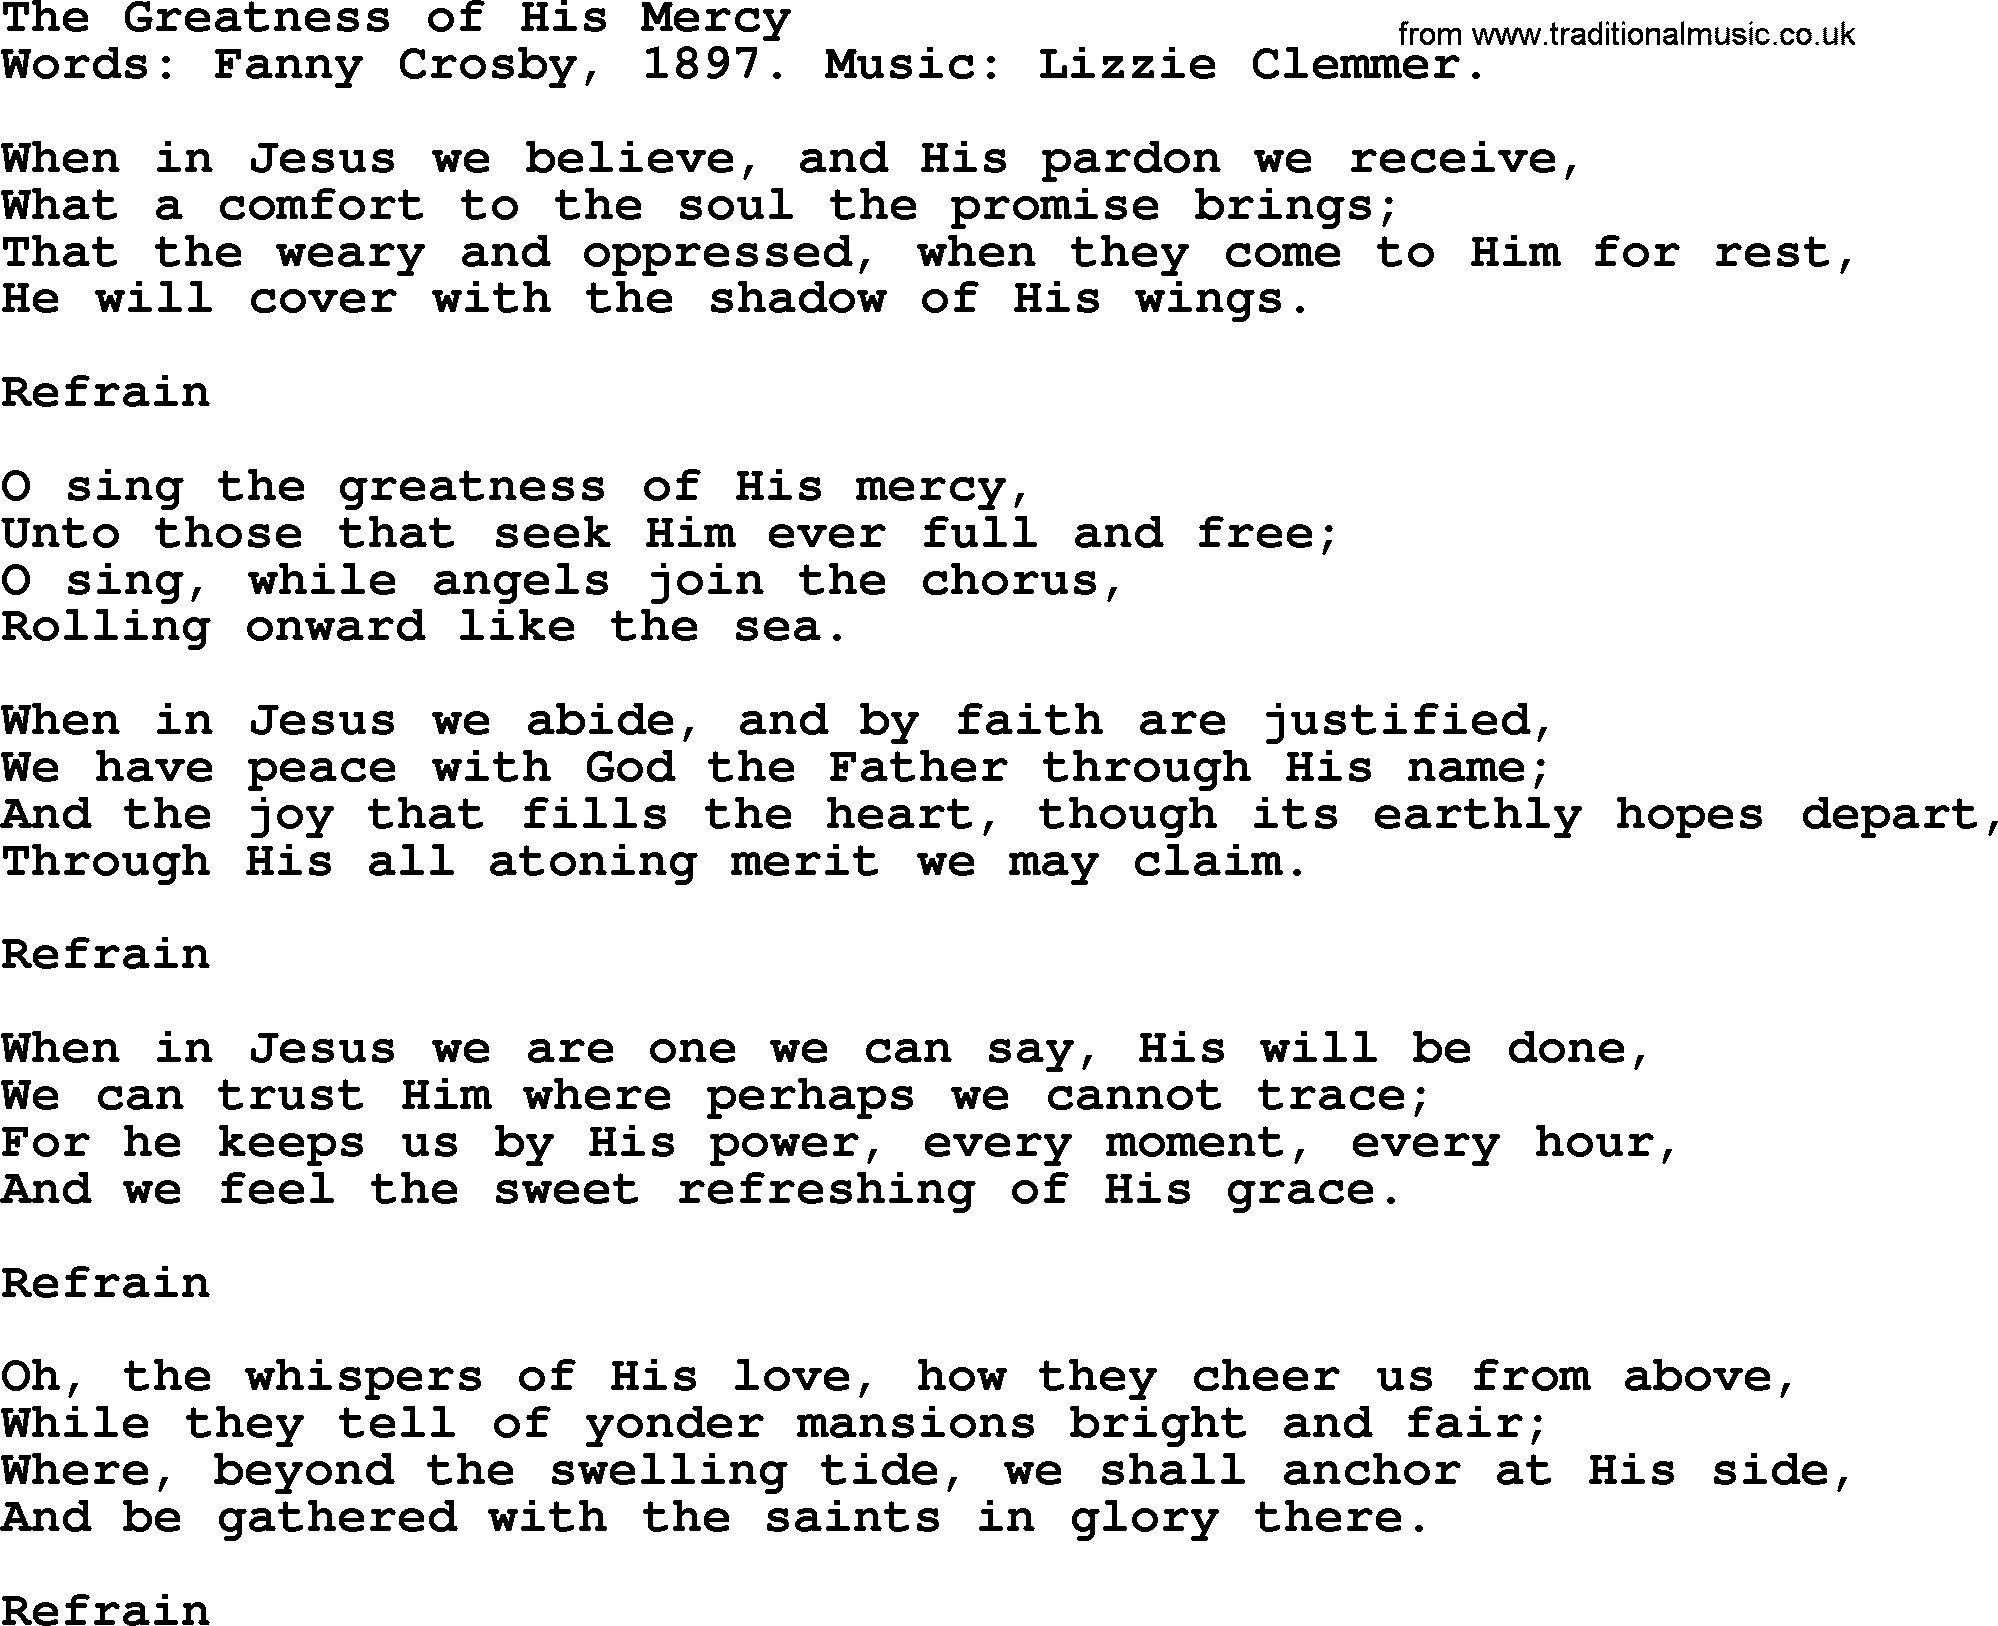 Fanny Crosby song: The Greatness Of His Mercy, lyrics